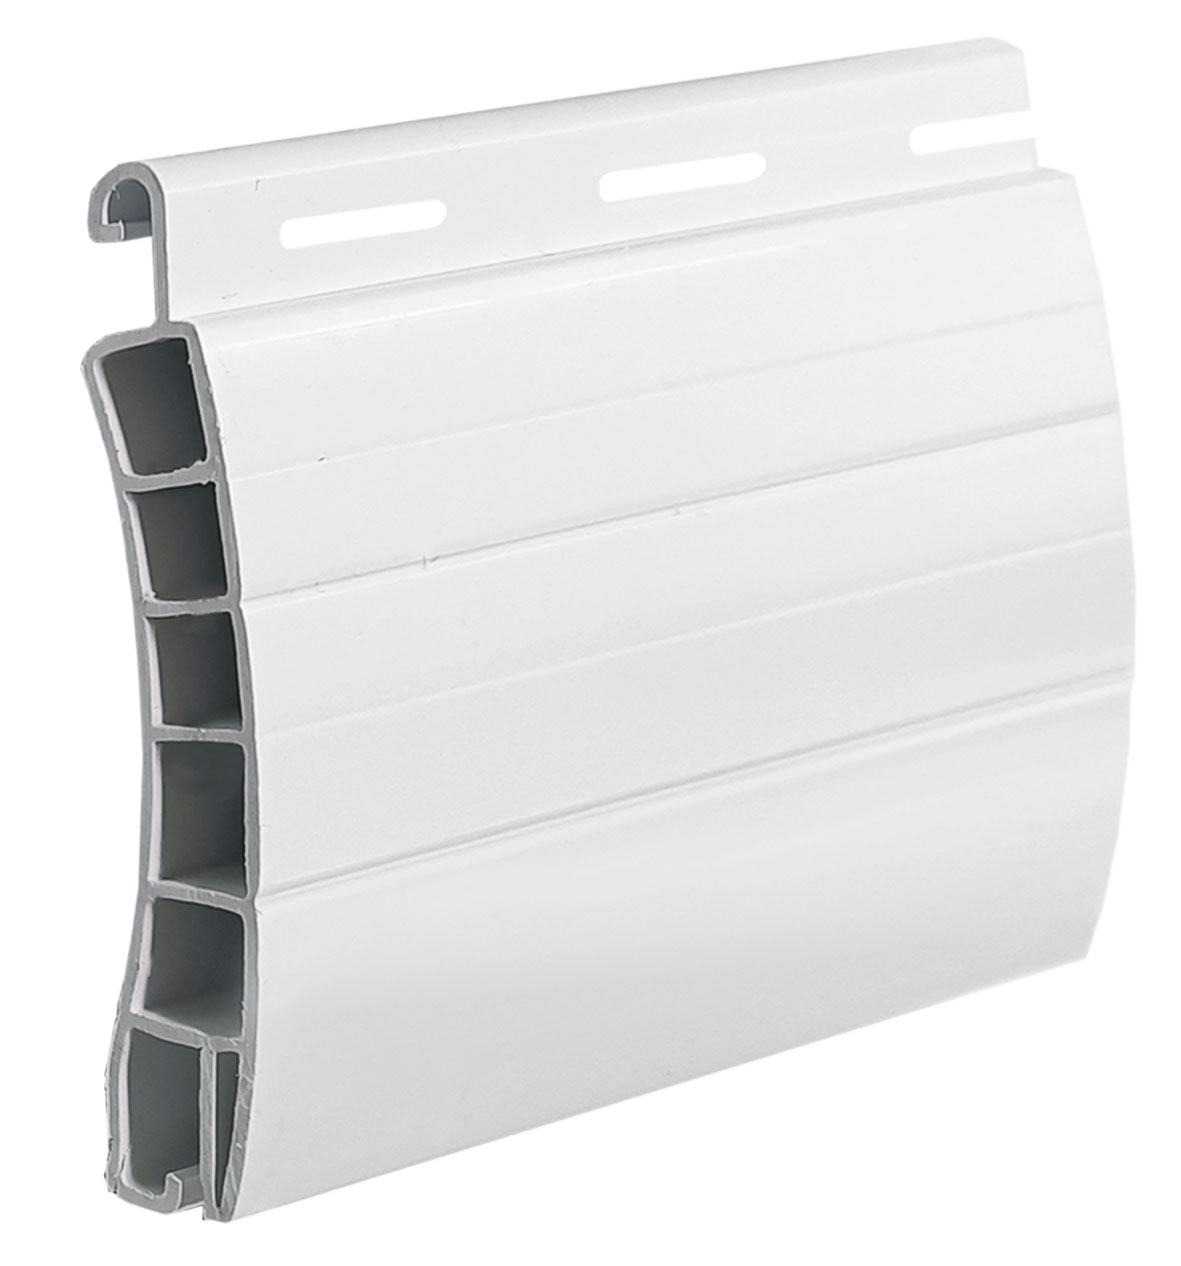  1 Bianco - Avvolgibile PVC - FIBREGLASS